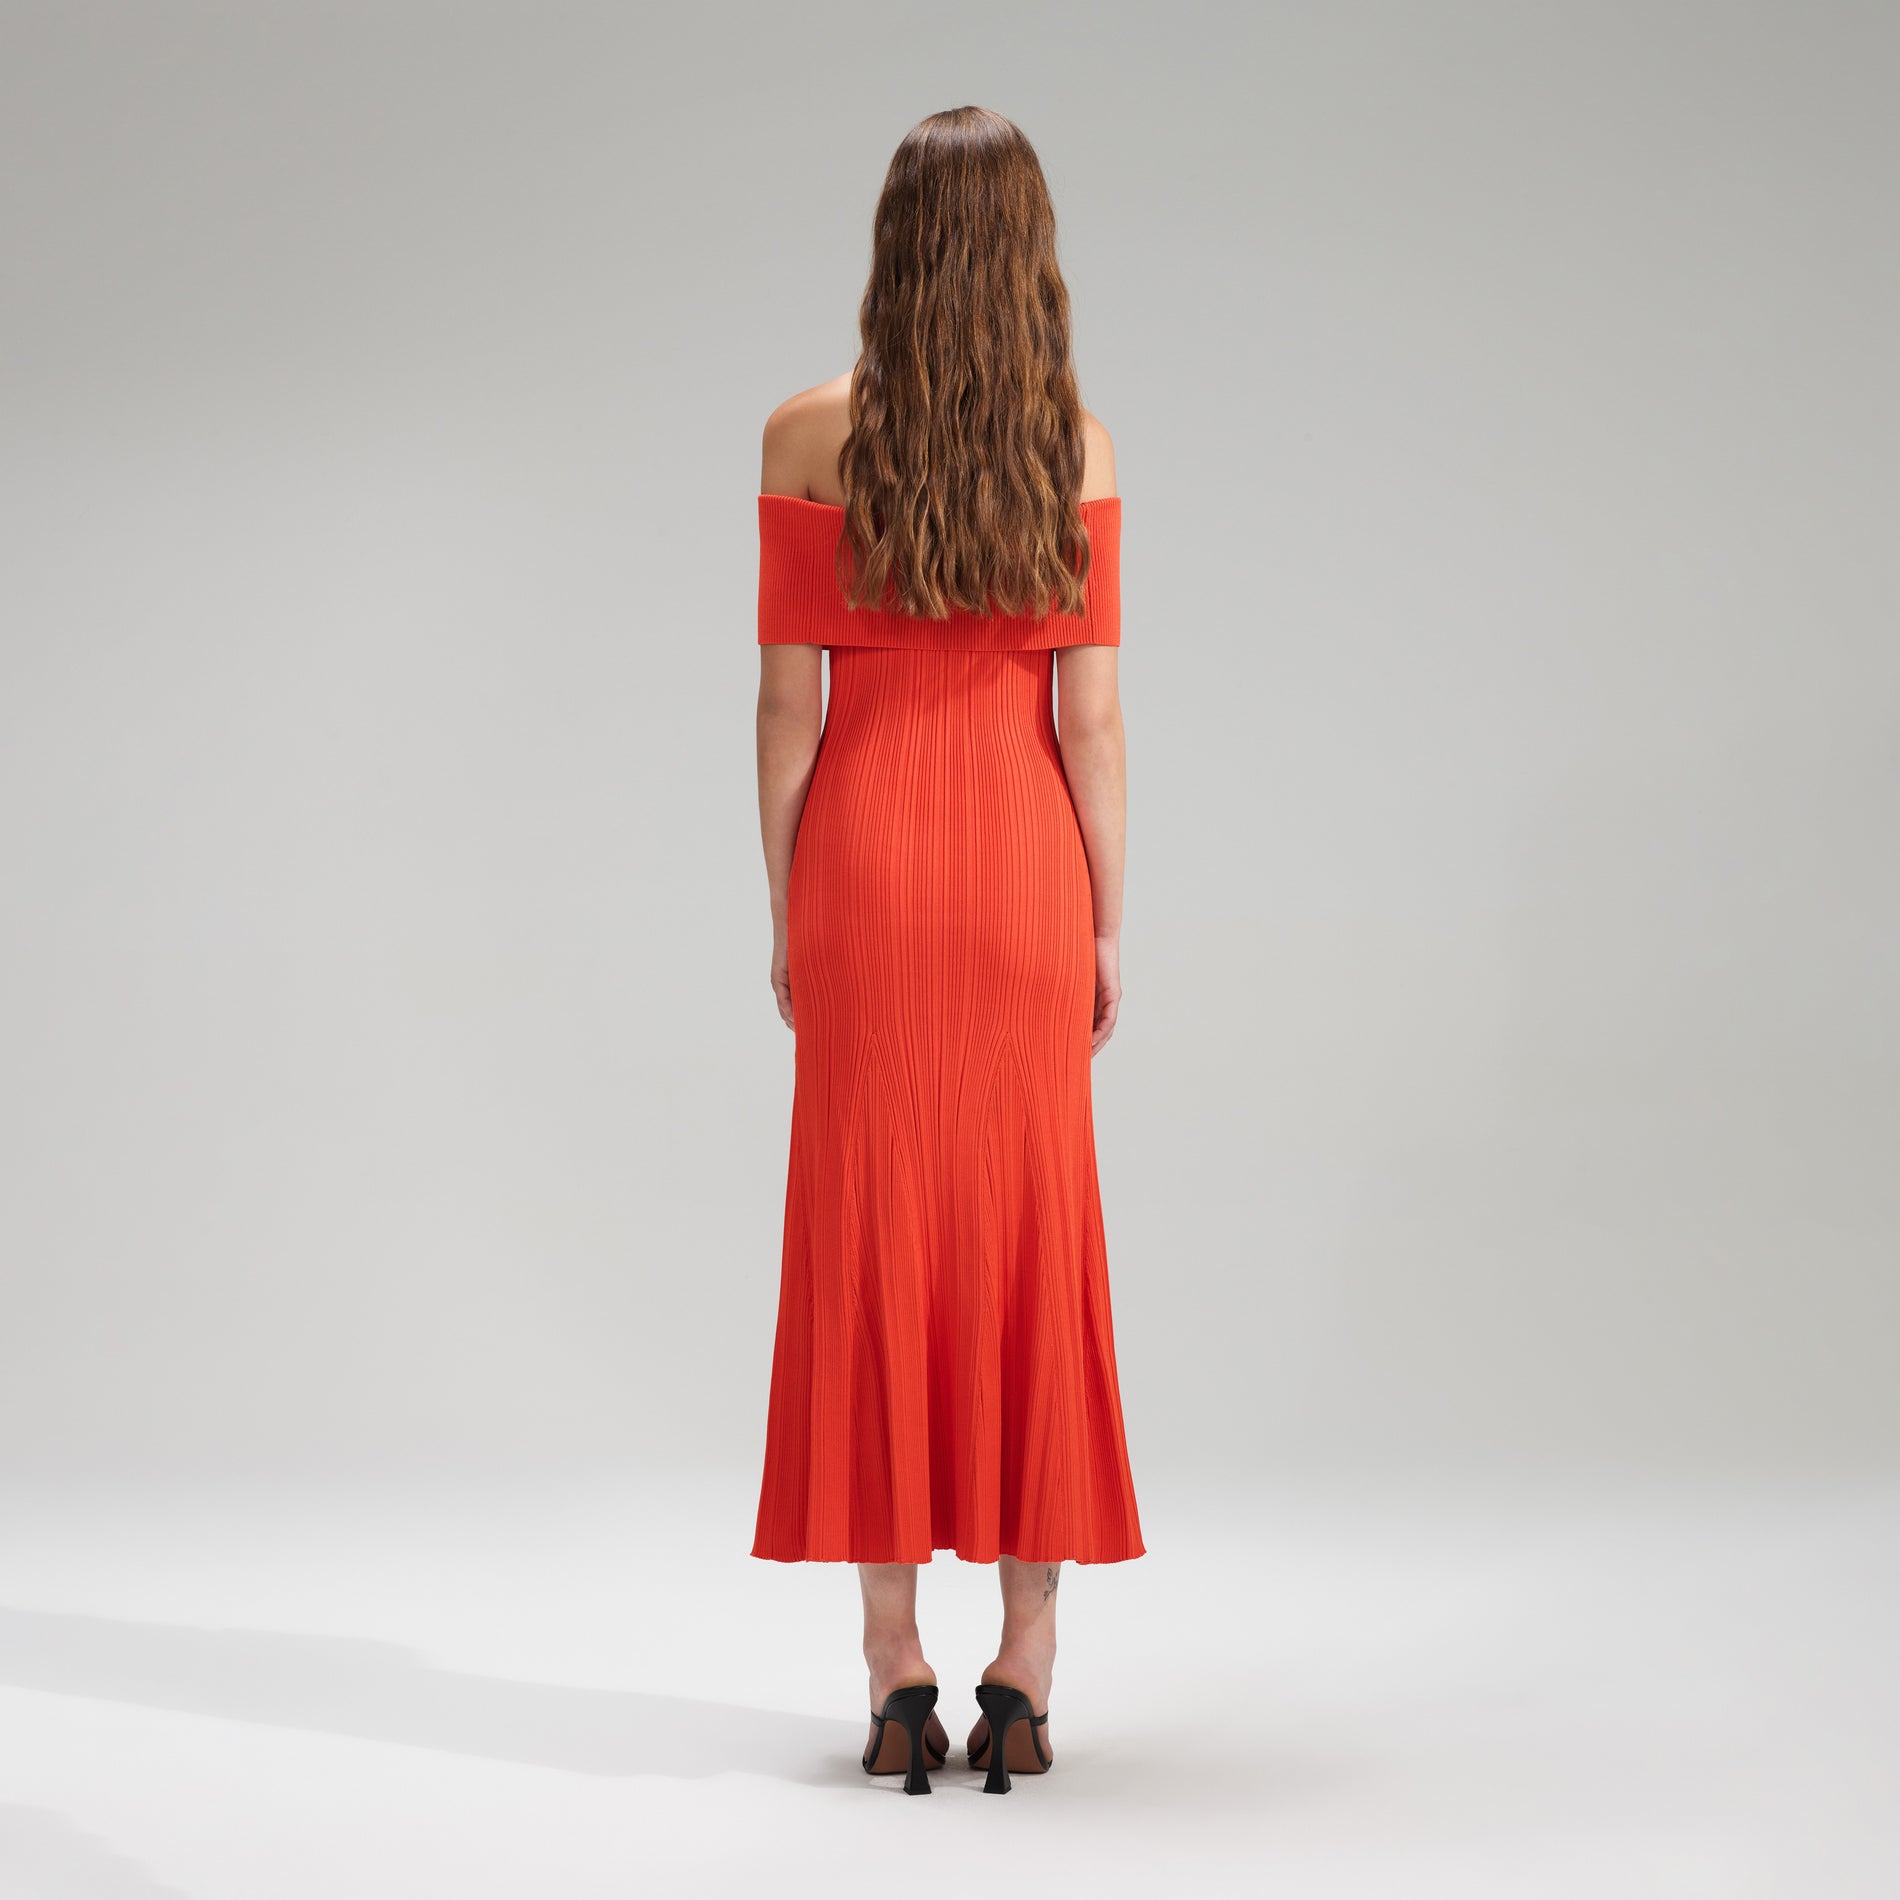 A woman wearing the Red Viscose Knit Midi Dress